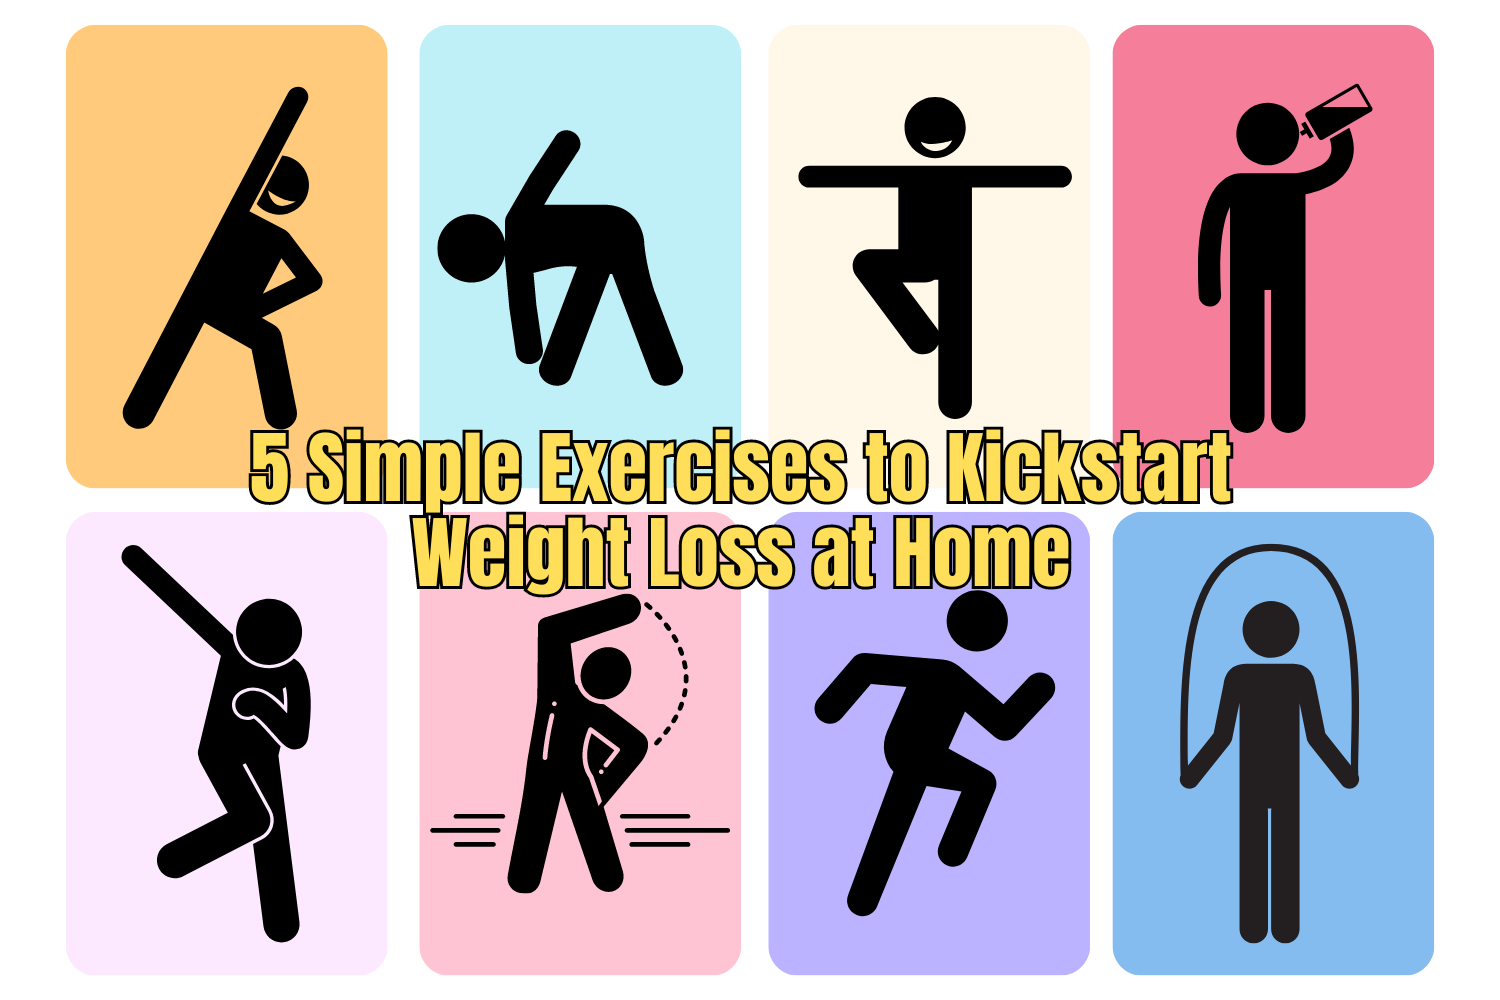 5 Simple Exercises to Kickstart Weight Loss at Home!